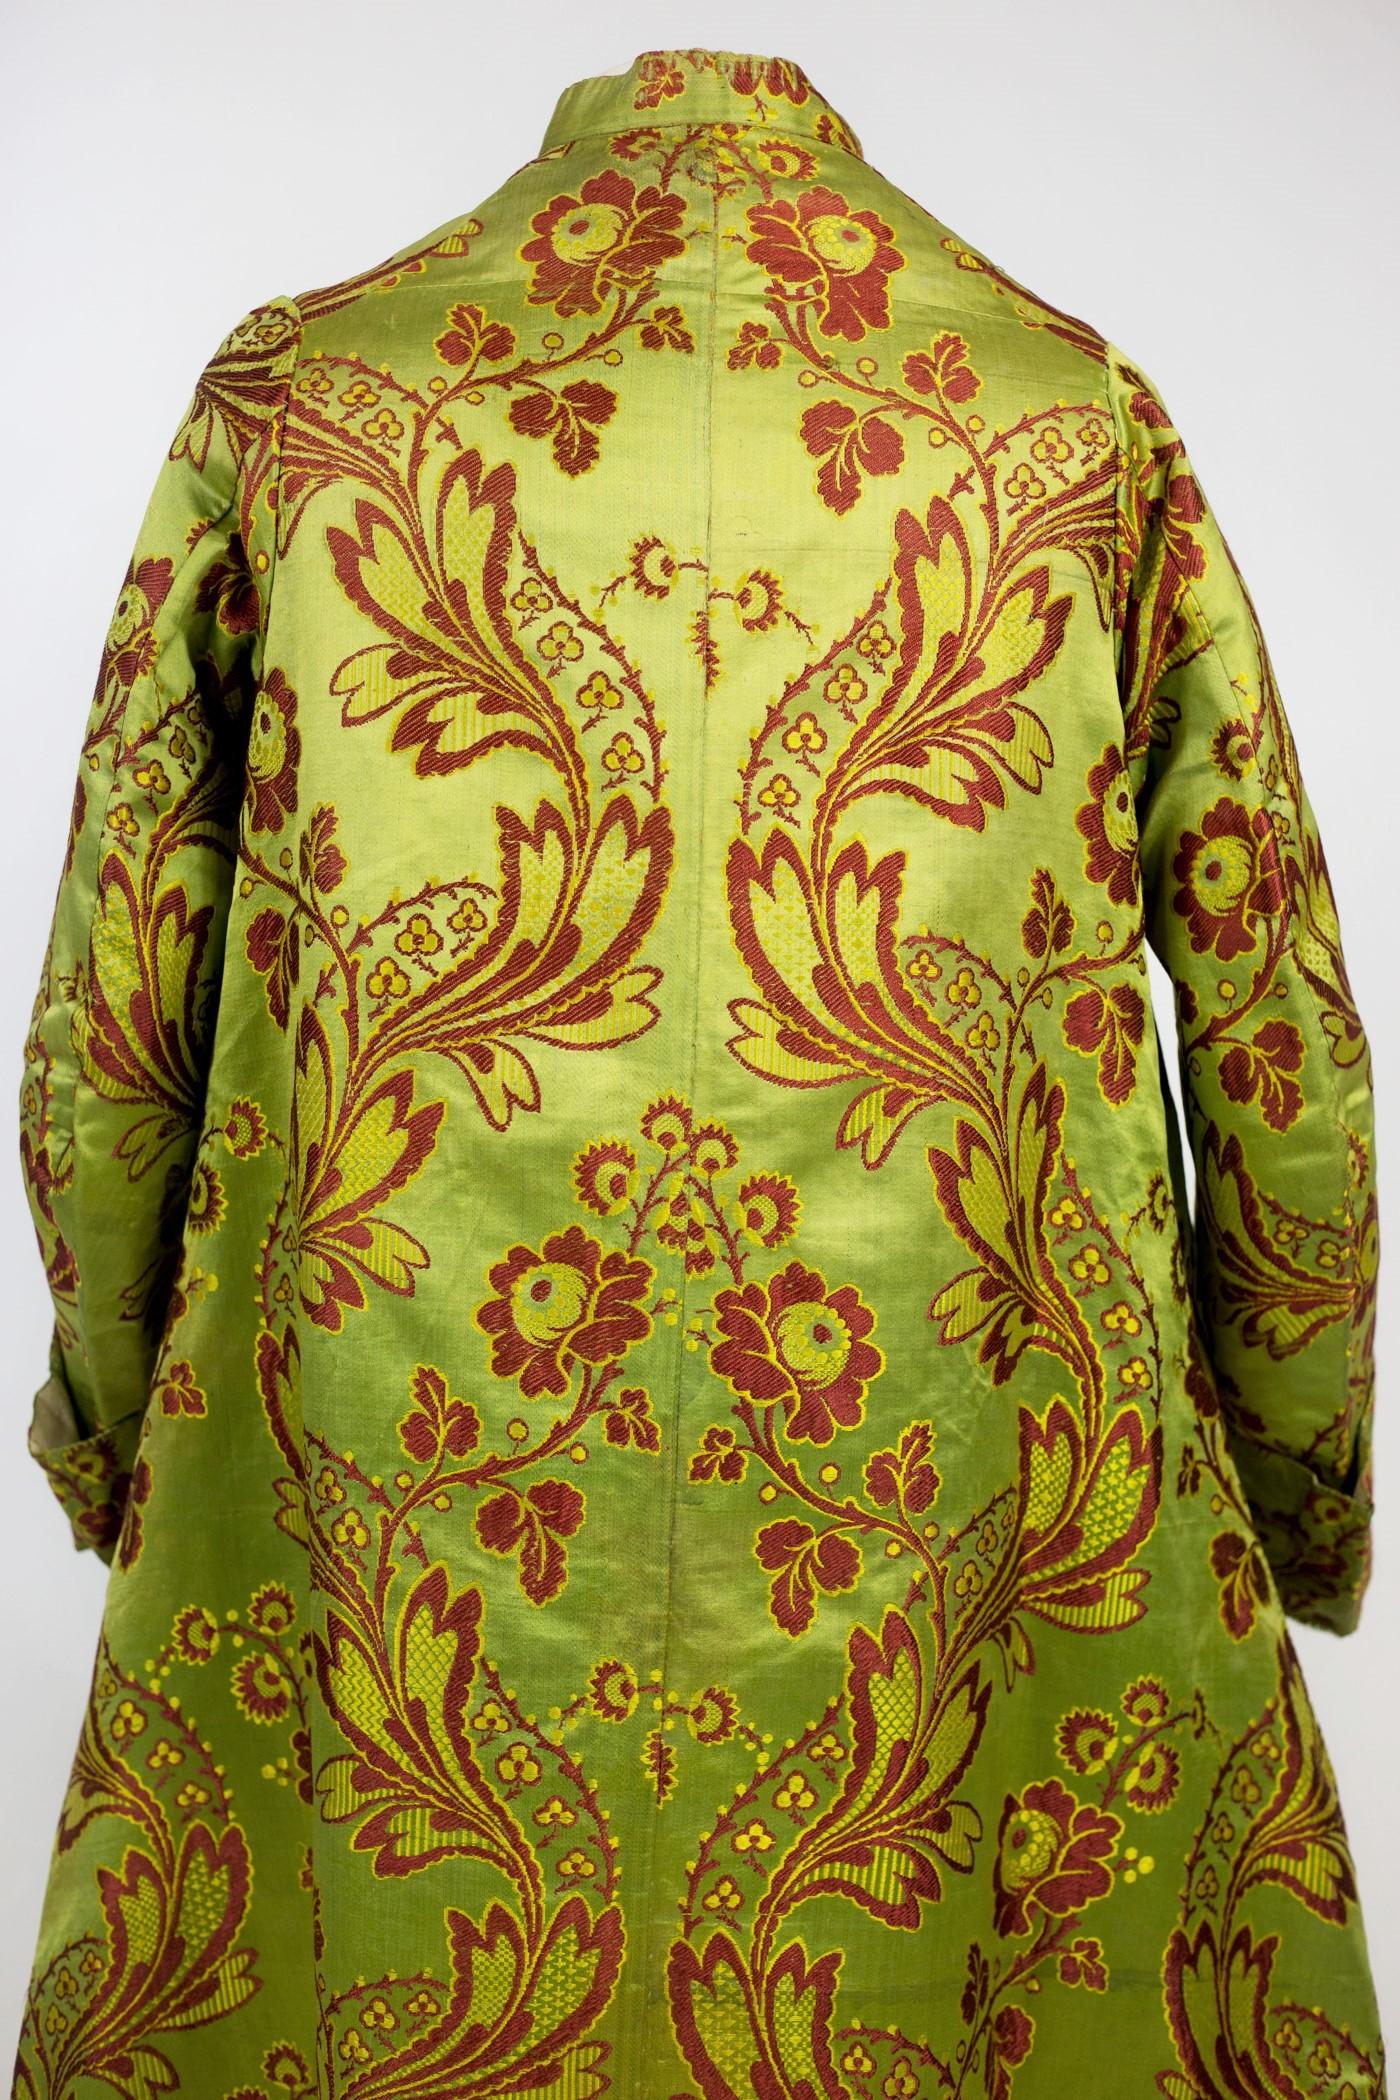 Women's or Men's A Lampas Silk Morning Gown or Man's Banyan Museum Piece France Circa 1760